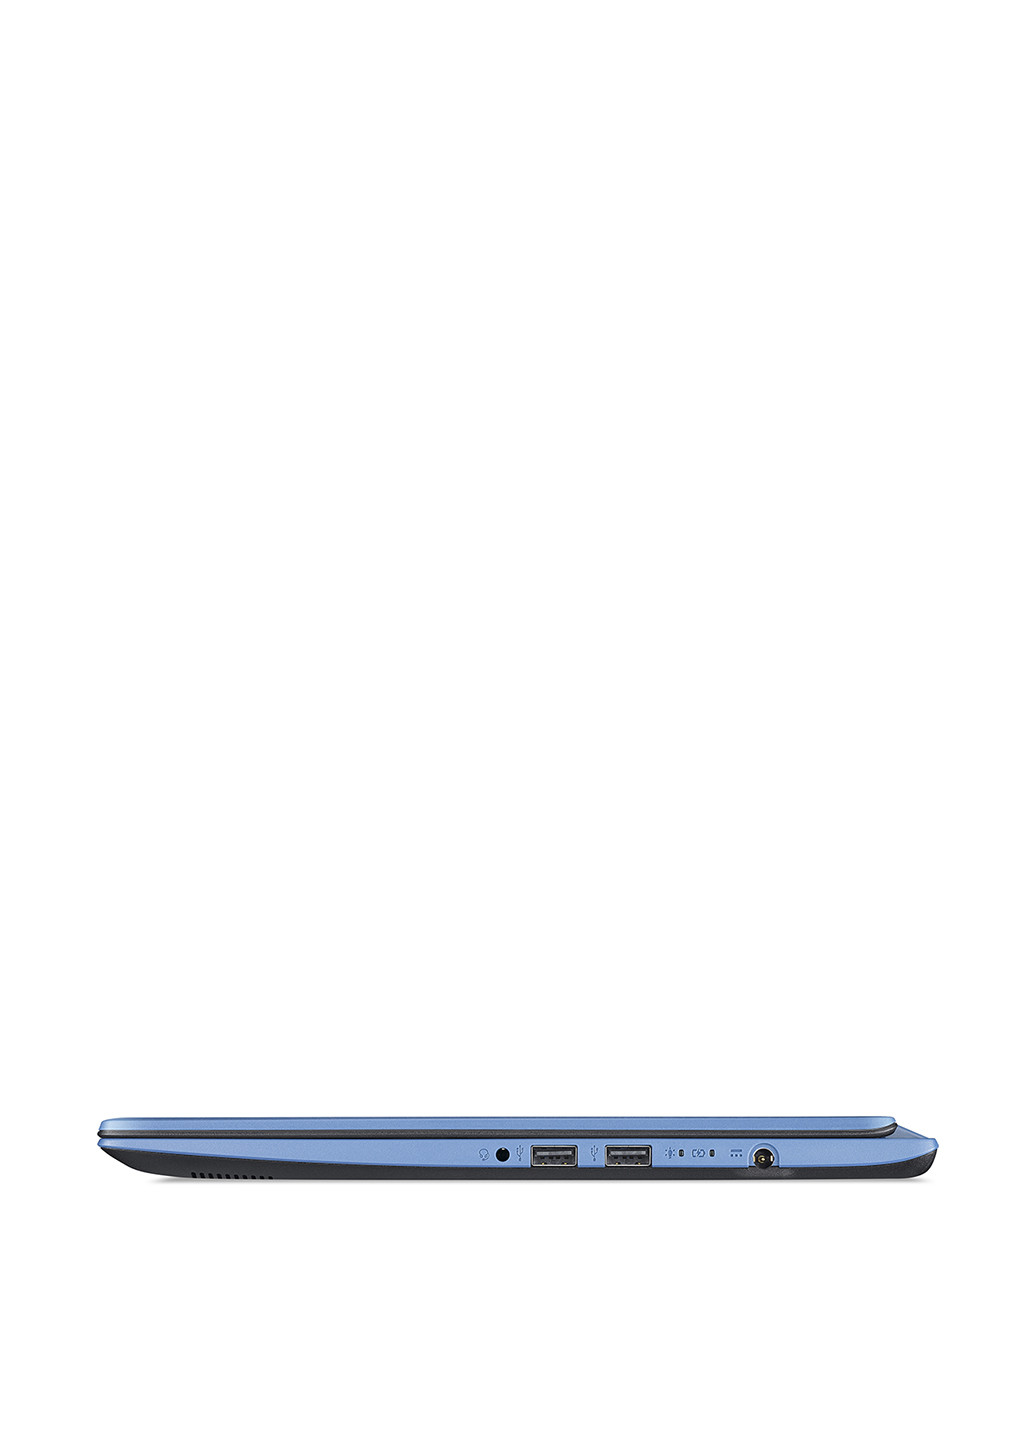 Ноутбук Acer aspire 1 a114-32-p4ax (nx.gw9eu.006) stone blue (130212518)